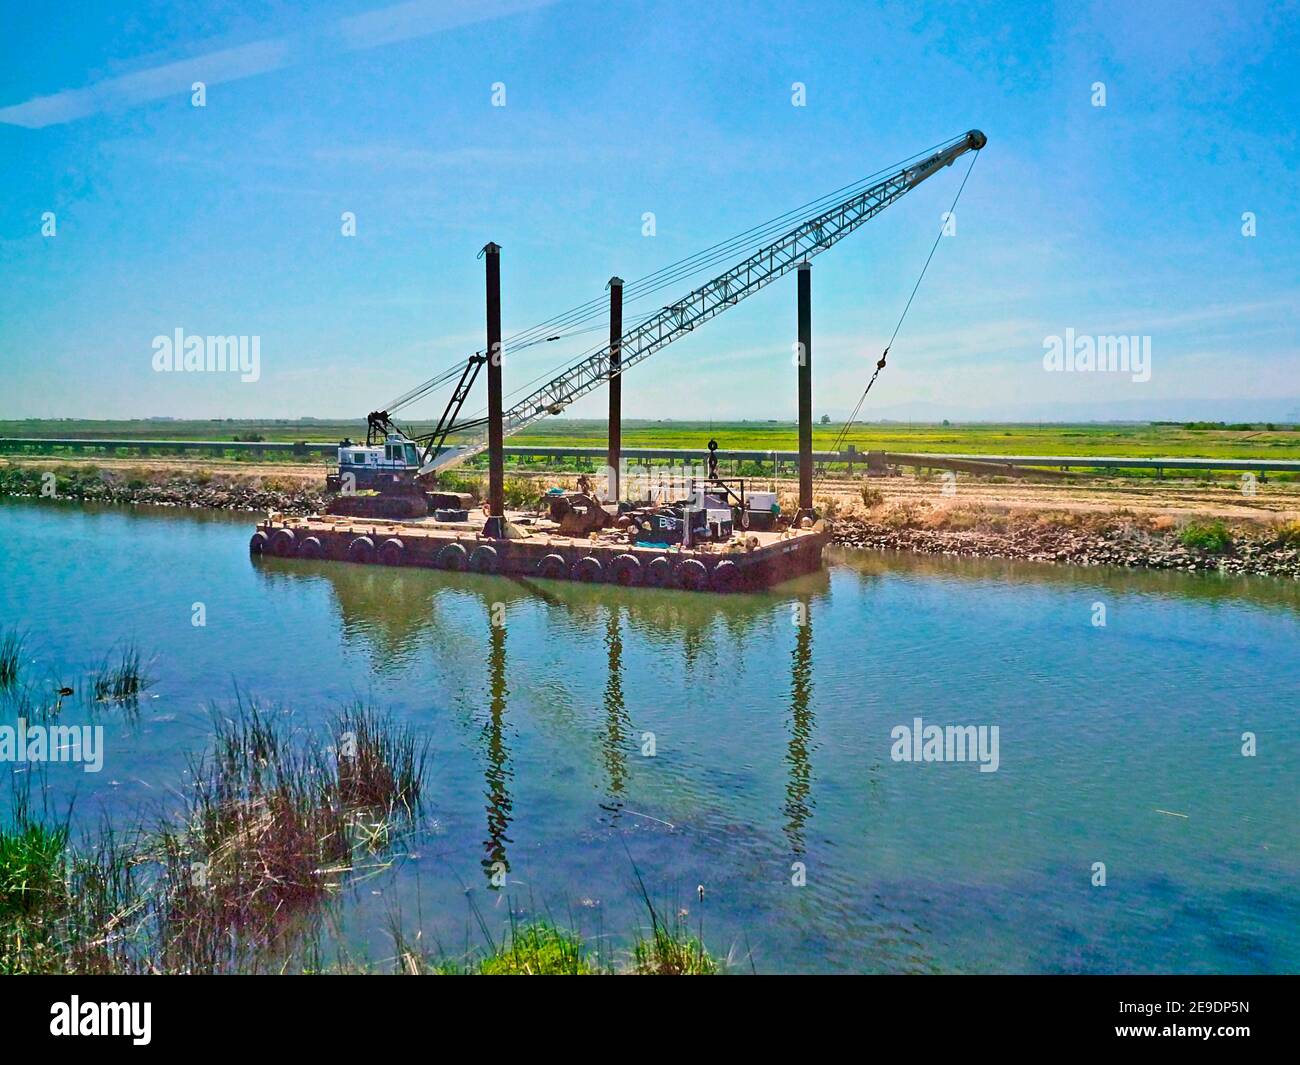 Construction crane on a barge in a canal near Stockton, California. Stock Photo